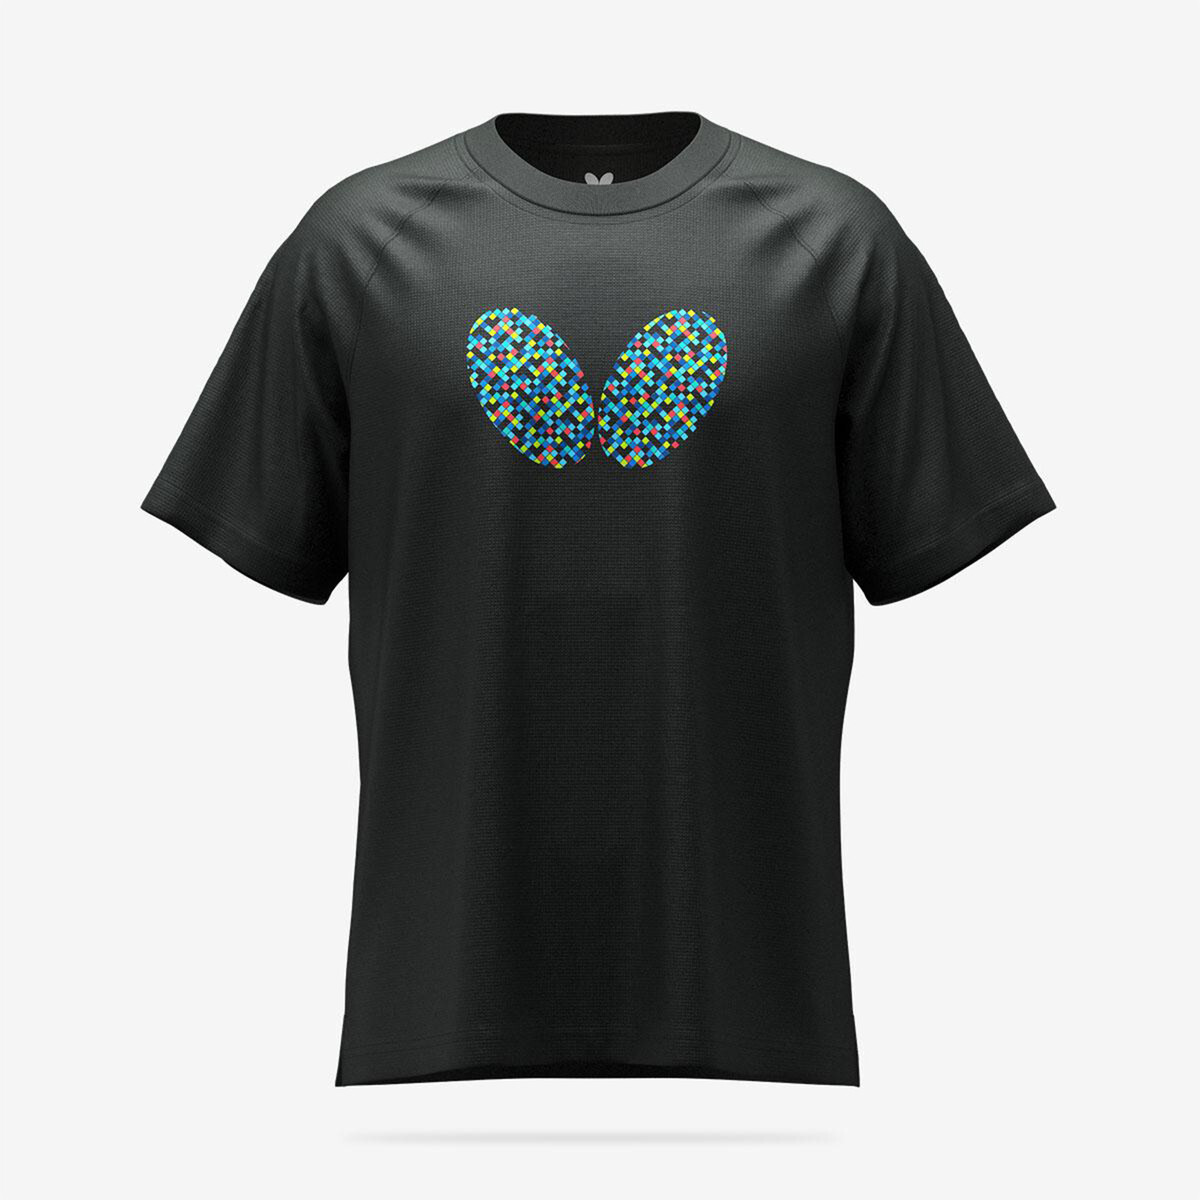 Butterfly Maltil T-Shirt - Black/Blue